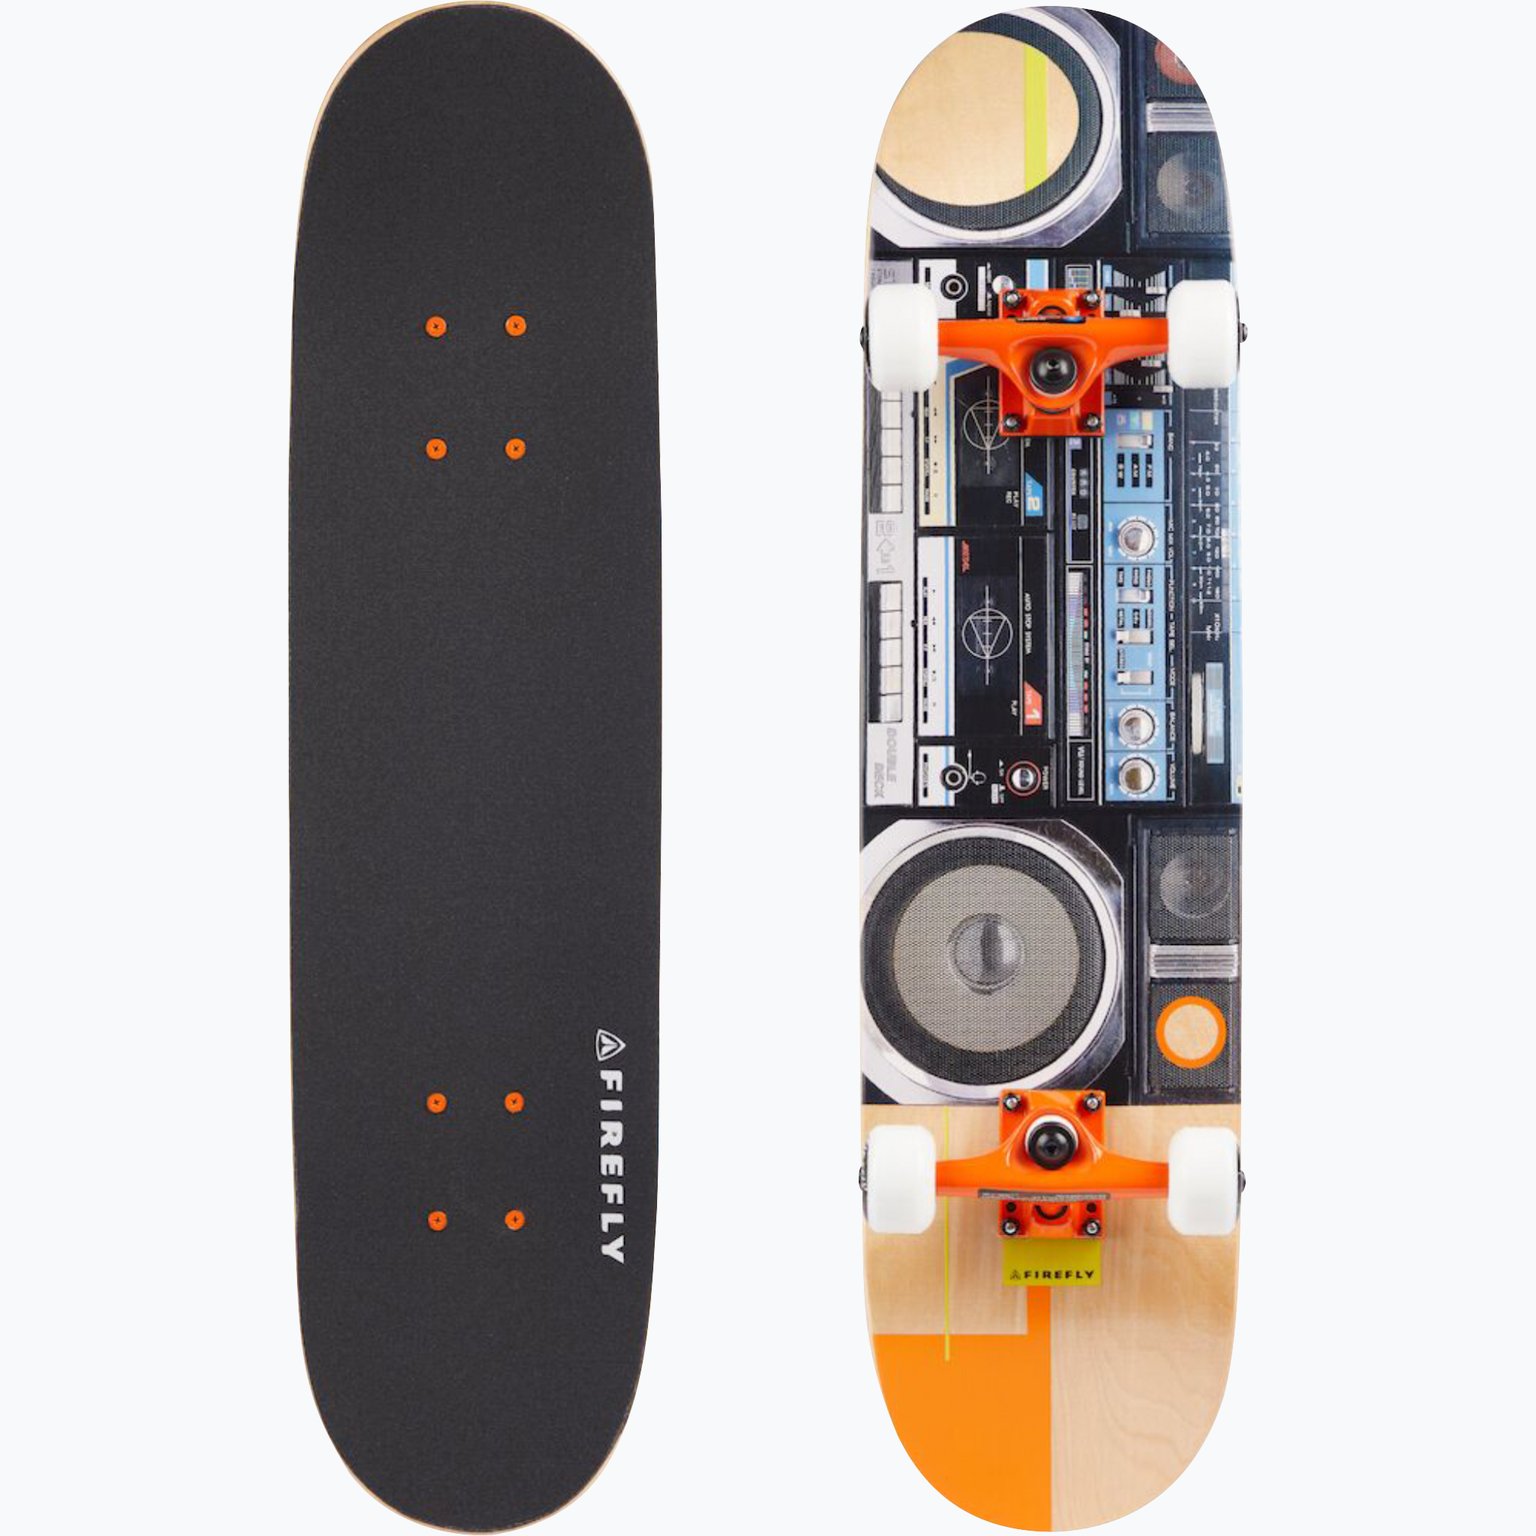 705 skateboard